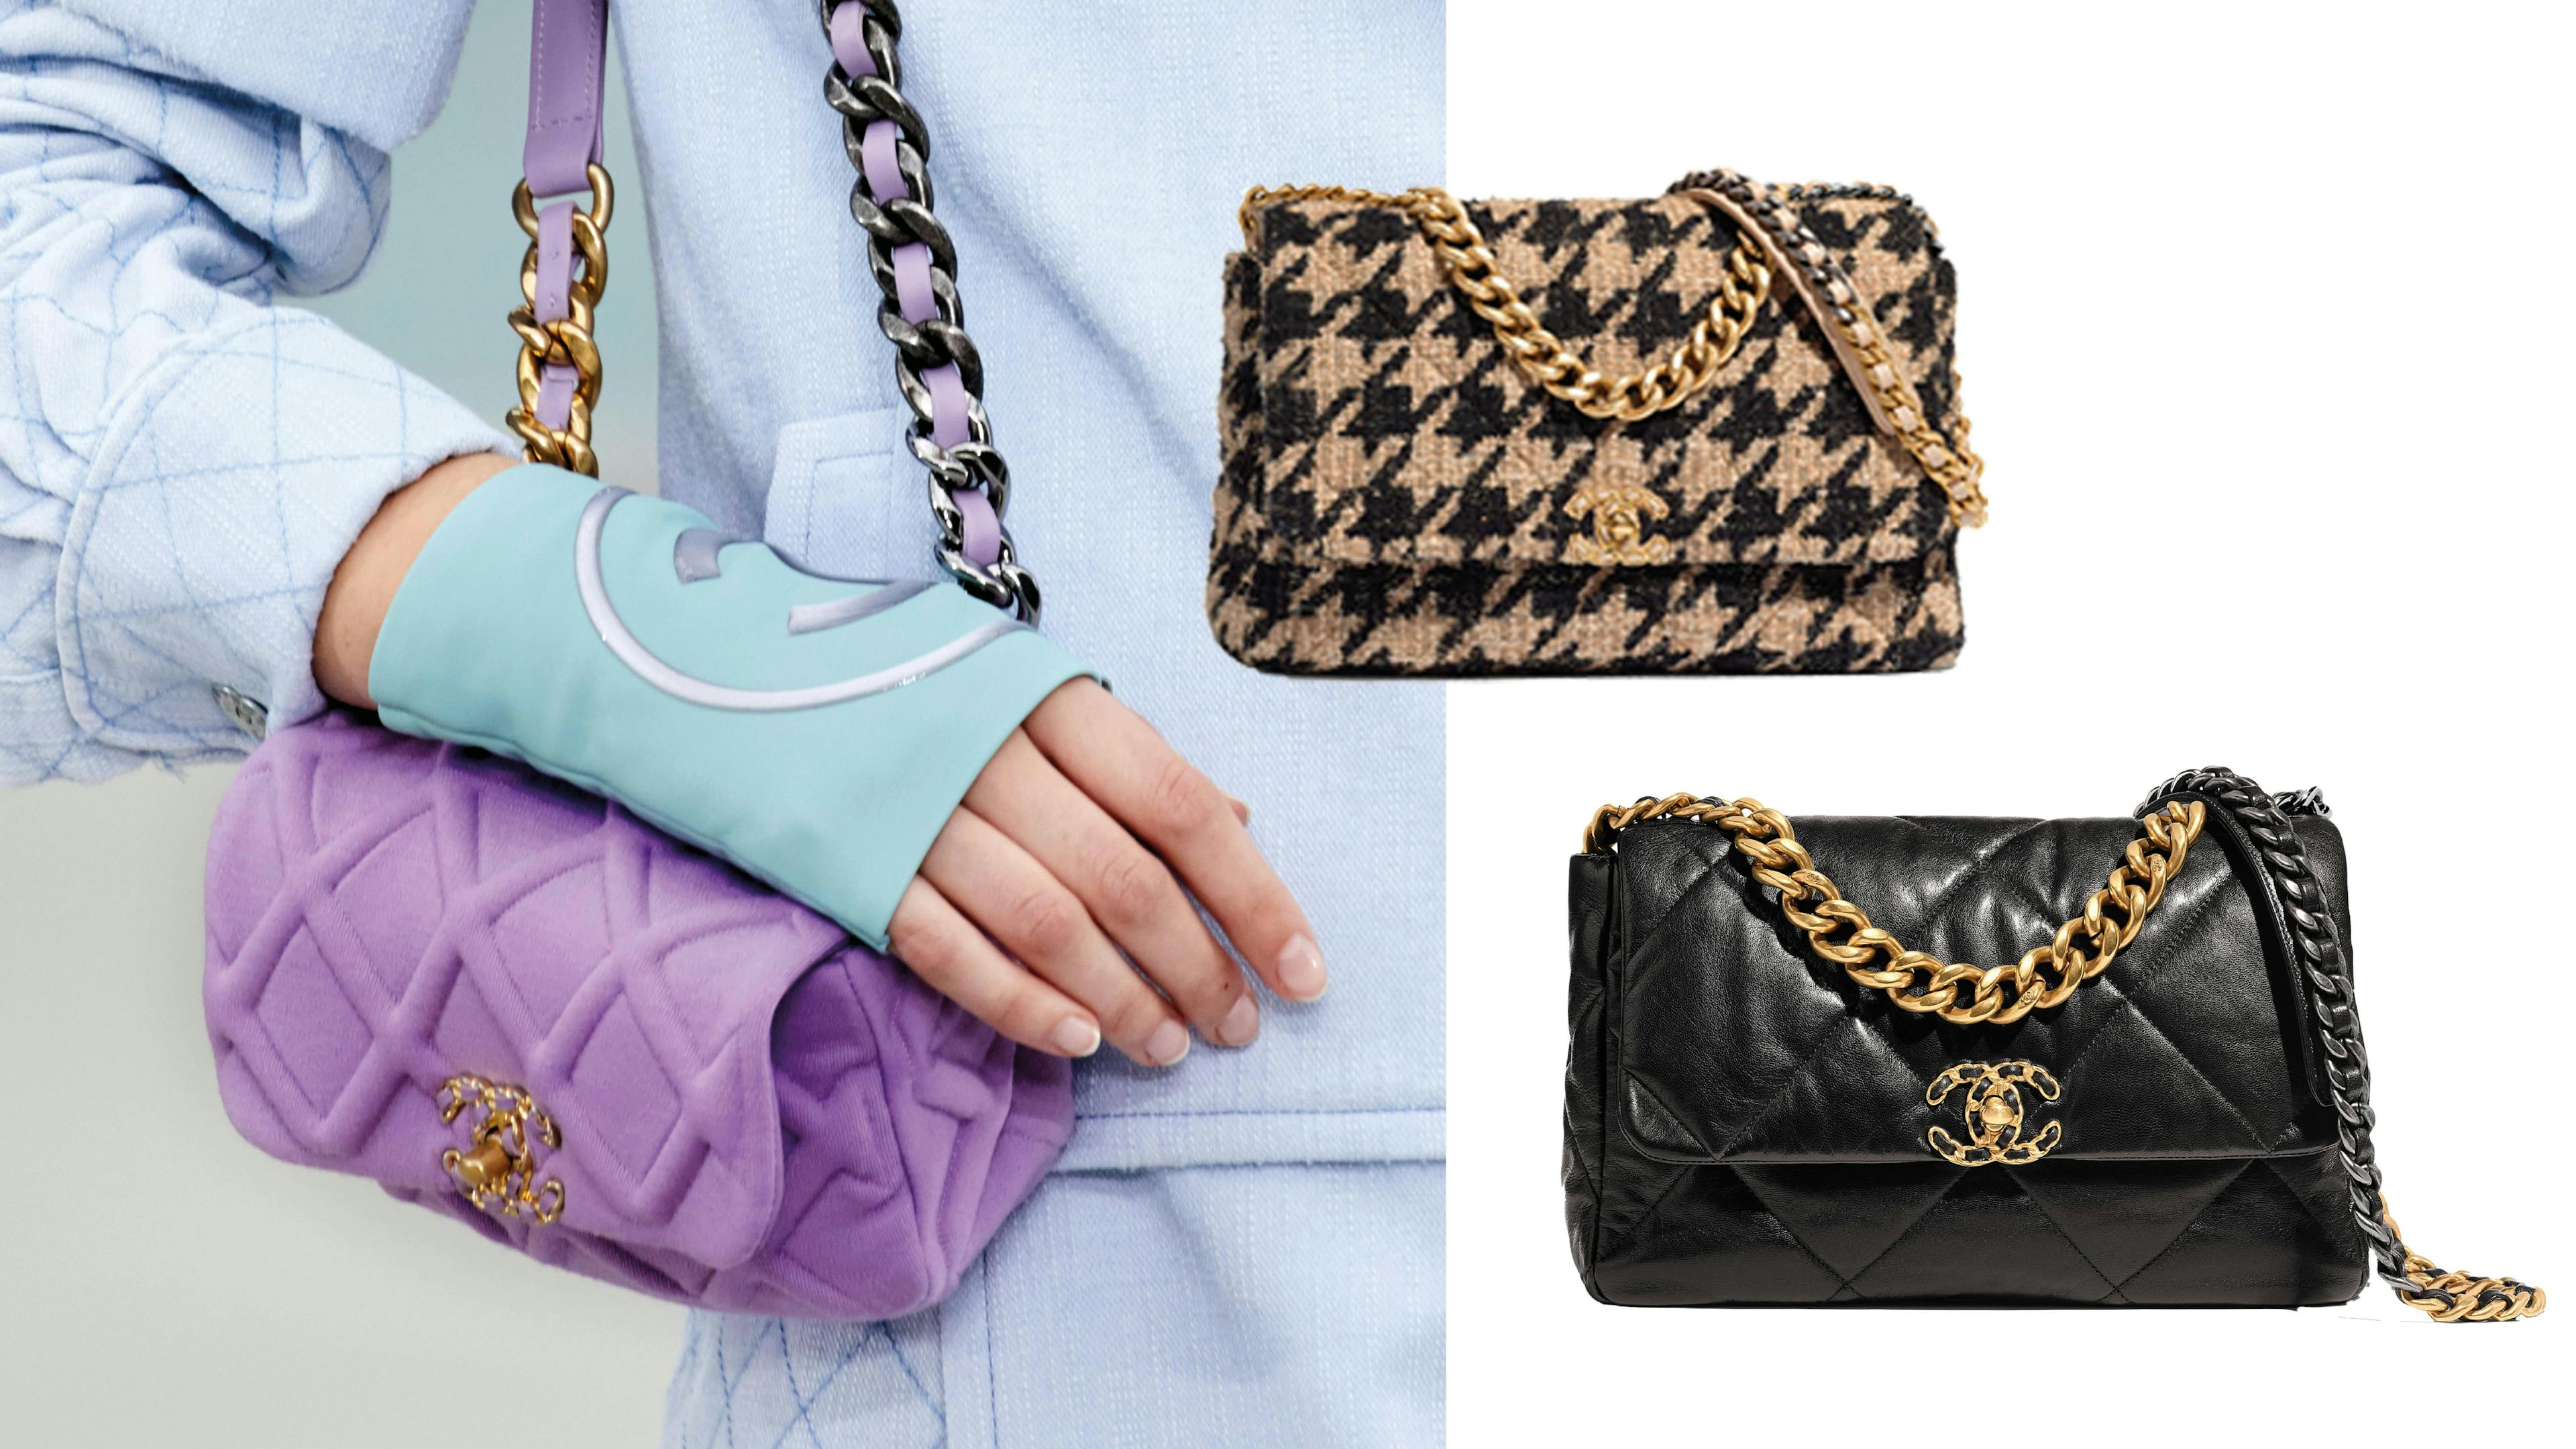 accessories accessory handbag bag purse person human